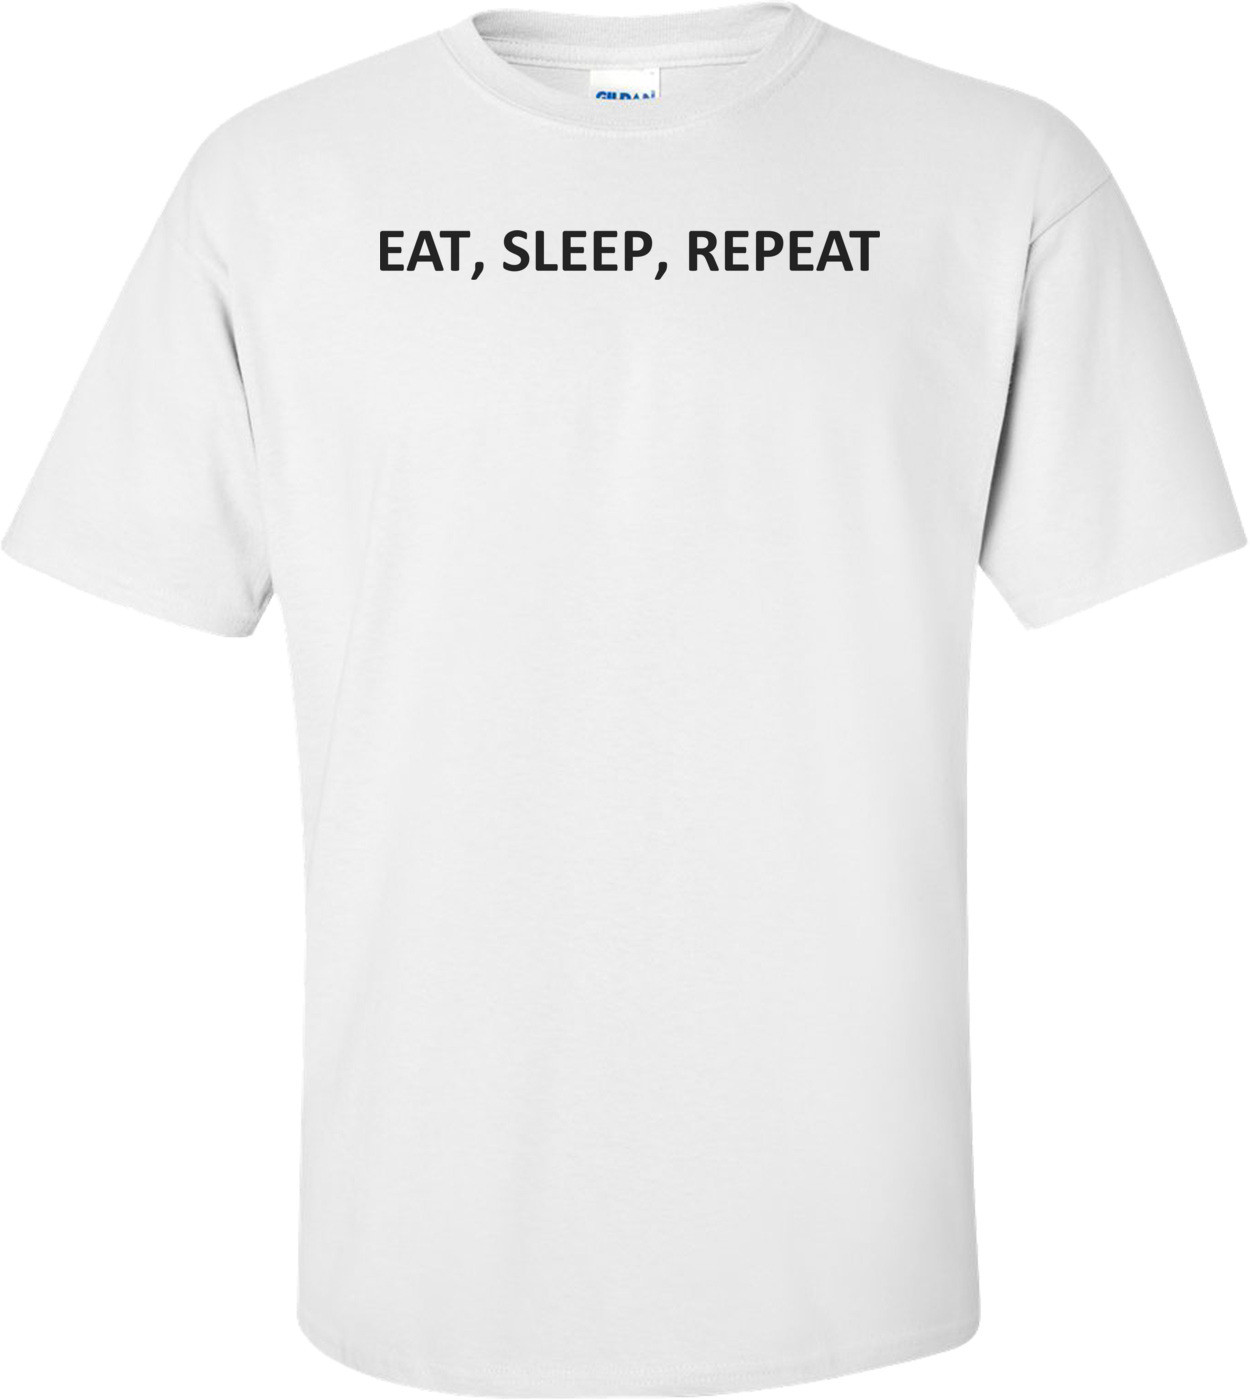 Eat Sleep Repeat Shirt